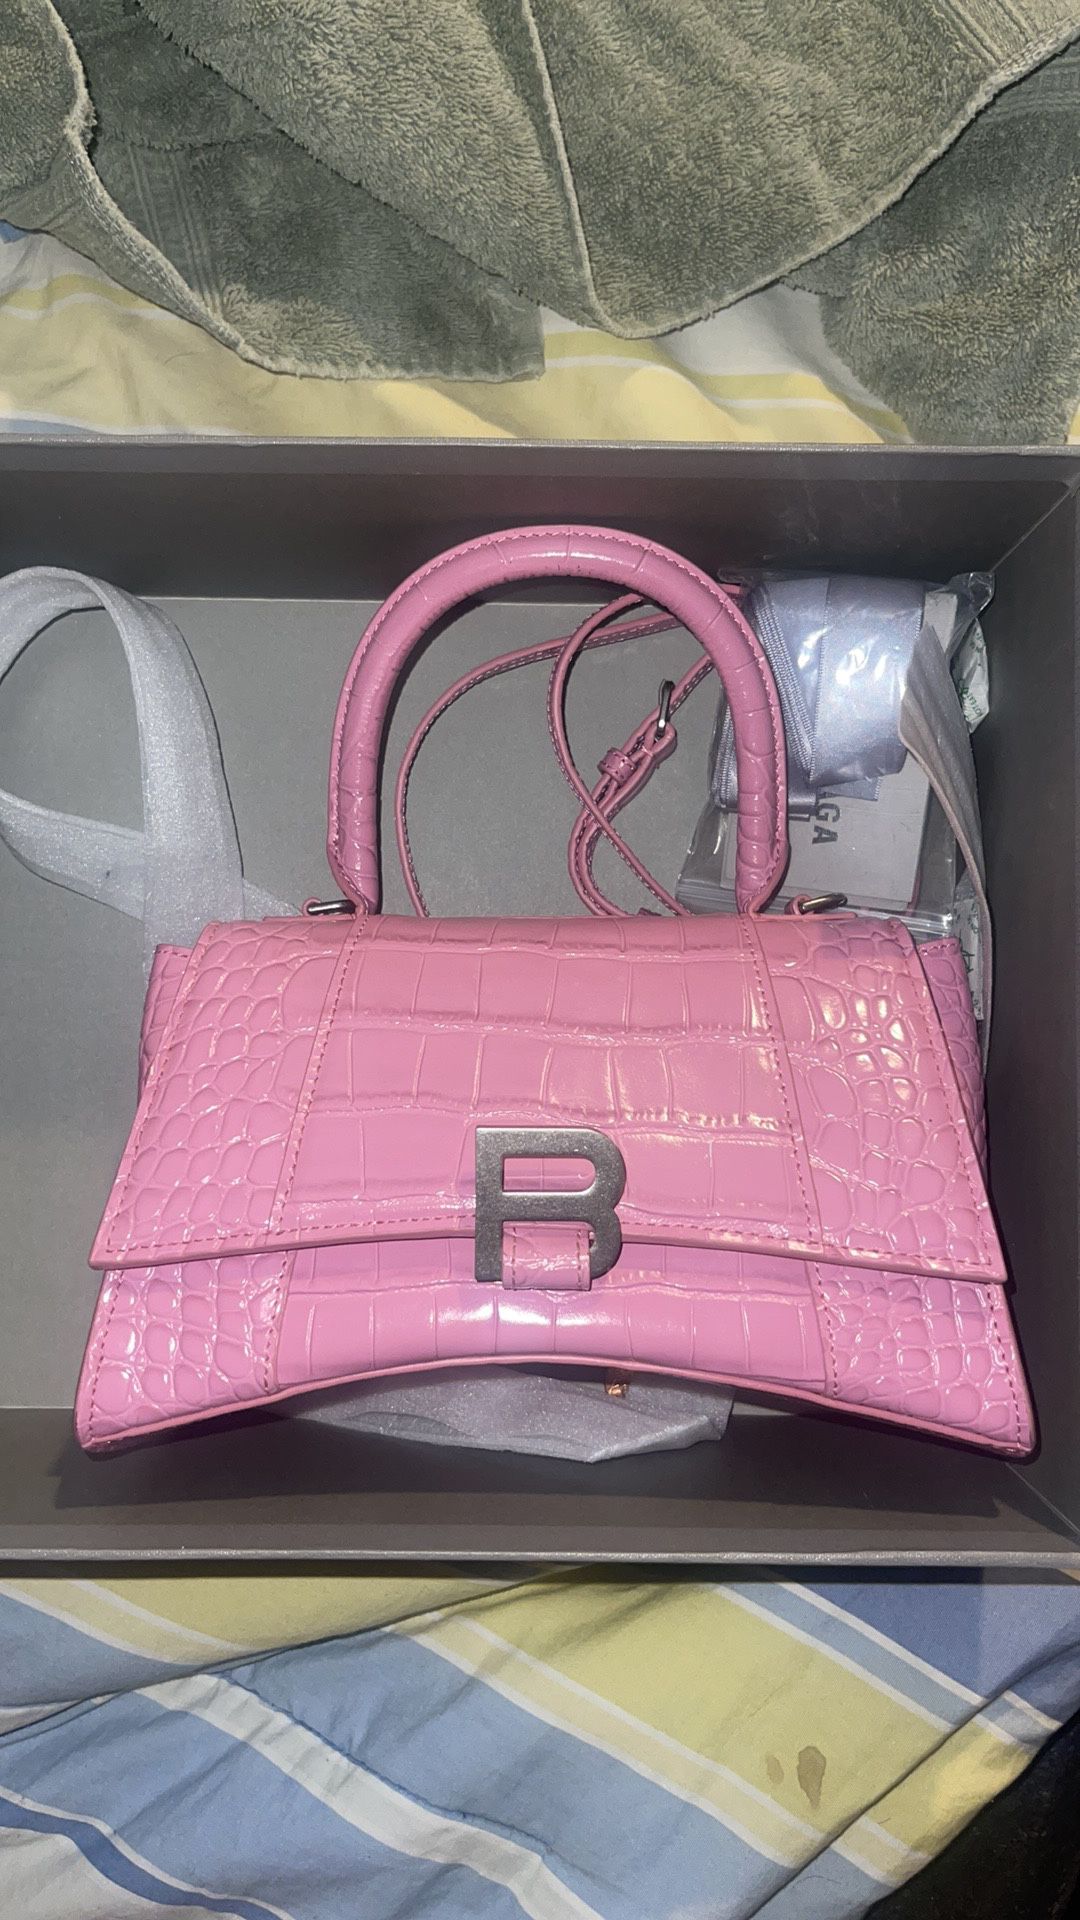 Balenciaga Hourglass Mock Croc Leather Mini Bag - Pink